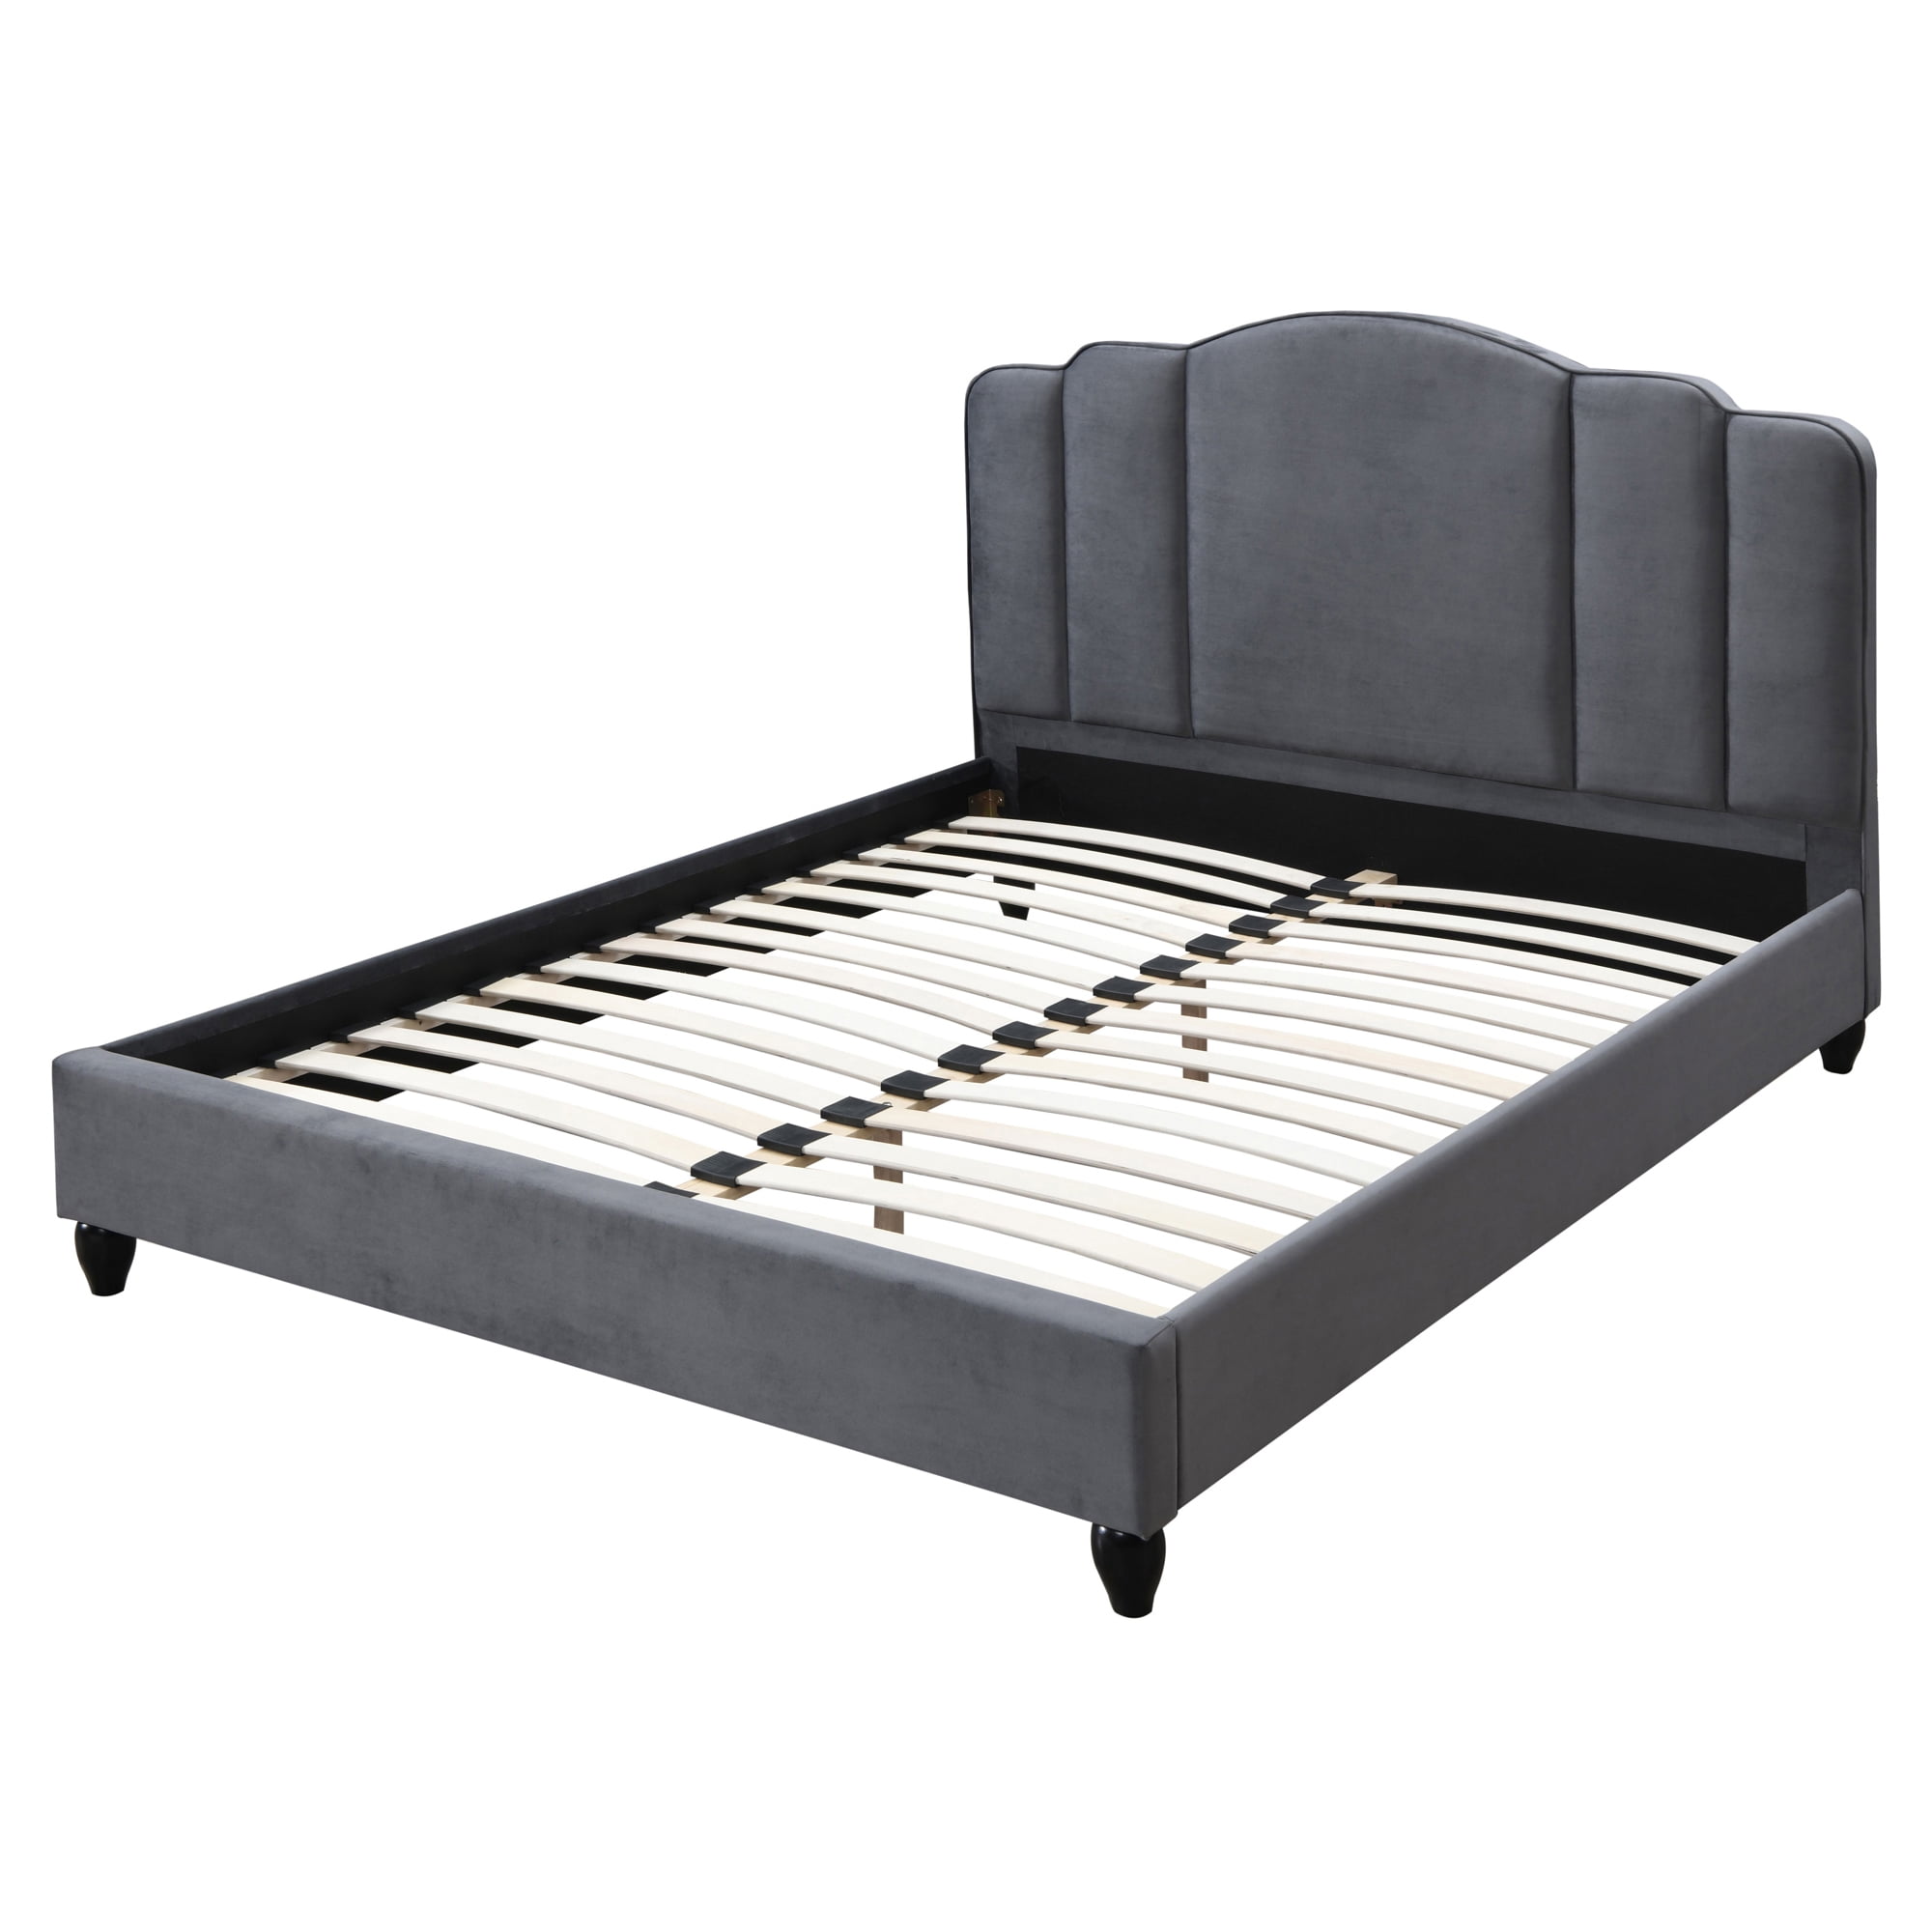 Picture of Acme Furniture 28967EK 87 x 79 x 46 in. Giada Eastern Bed, Charcoal Fabric - King Size